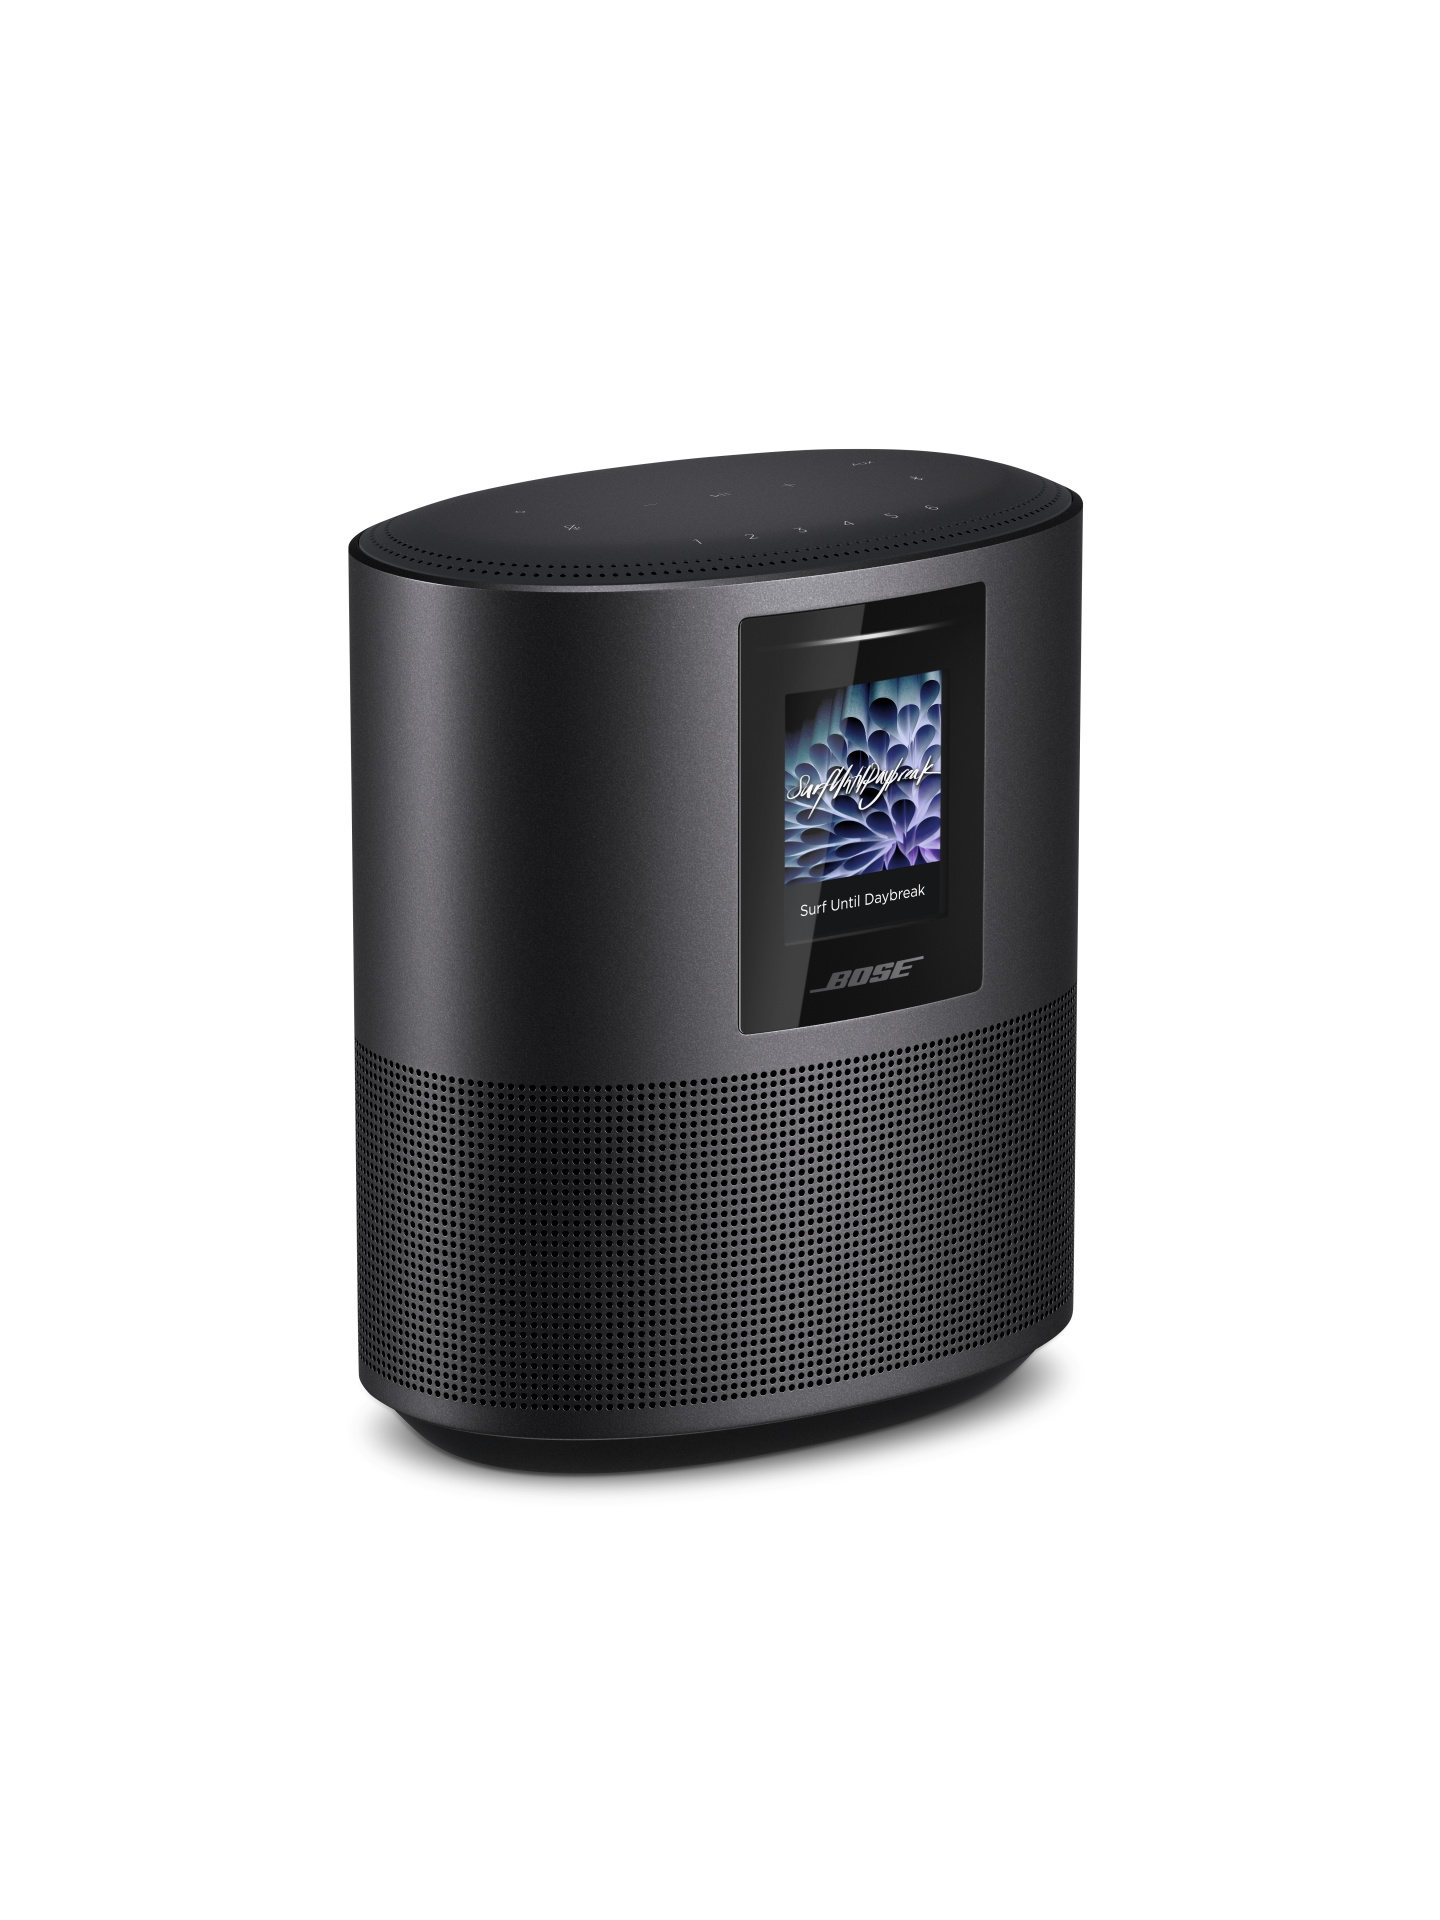 Bose Home Speaker 500 Wireless Smart Speaker with Google Assistant - Black - image 2 of 6